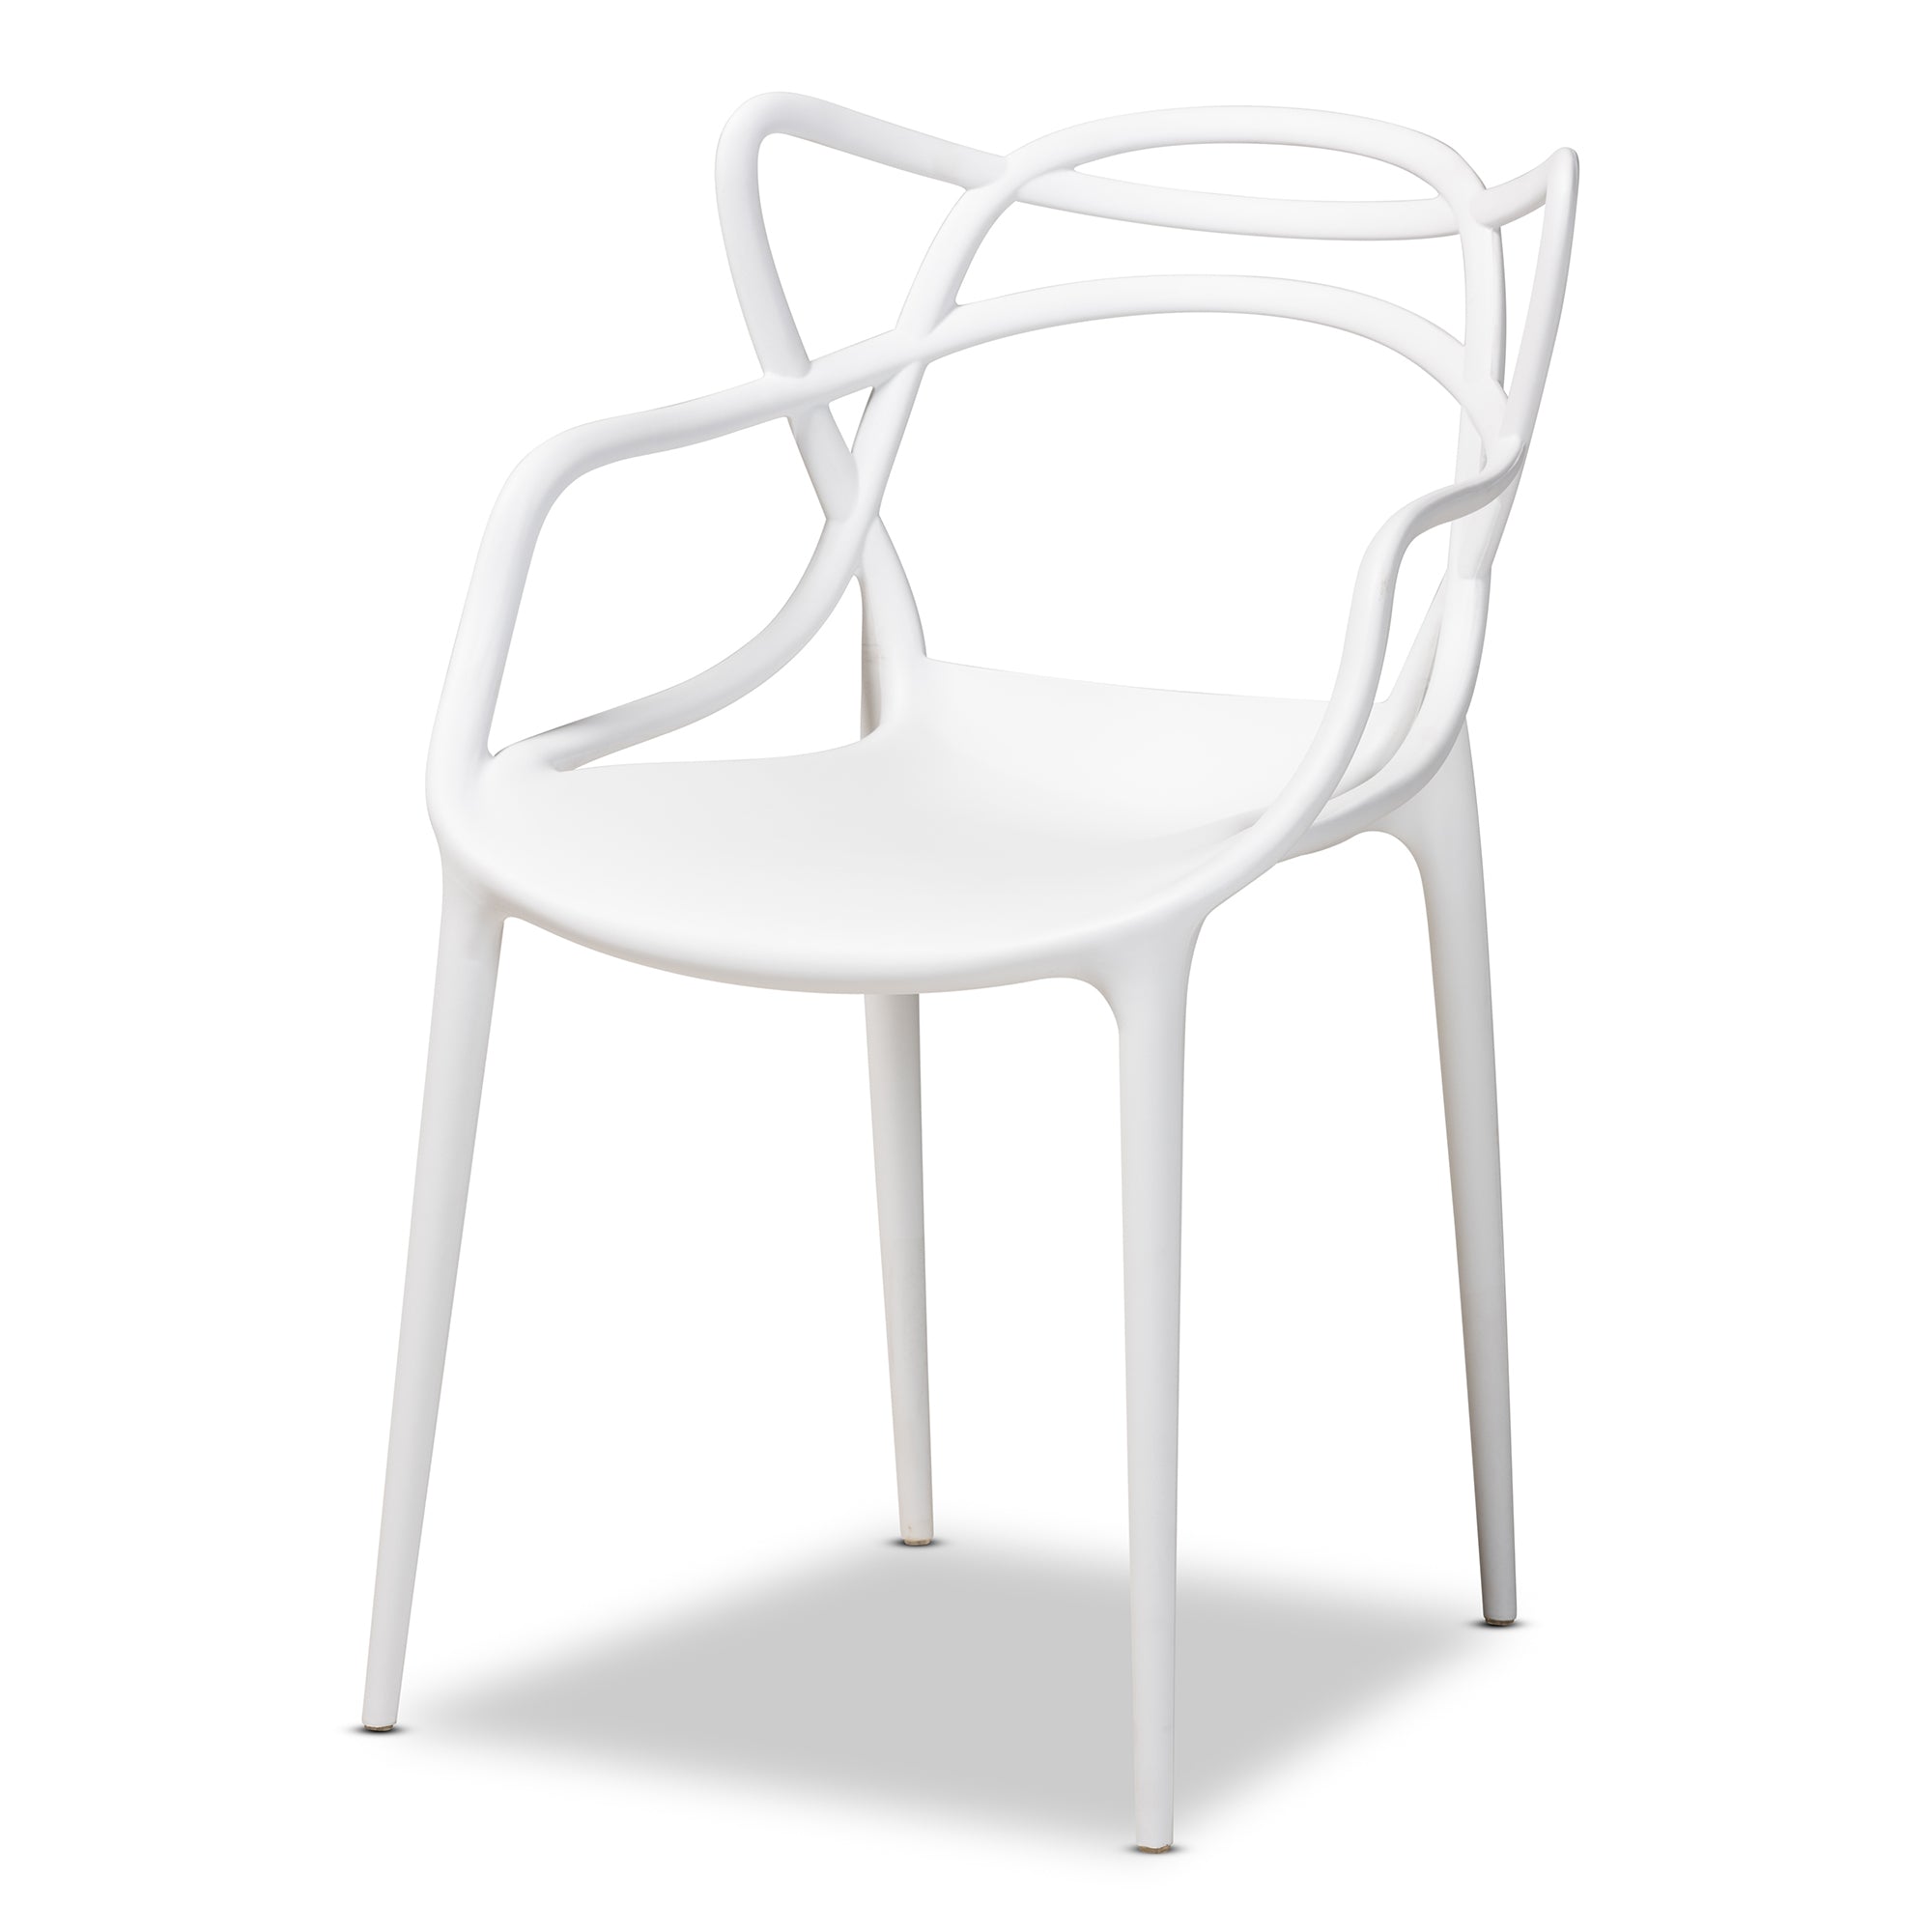 Landry Modern Dining Chairs 4-Piece-Dining Chairs-Baxton Studio - WI-Wall2Wall Furnishings